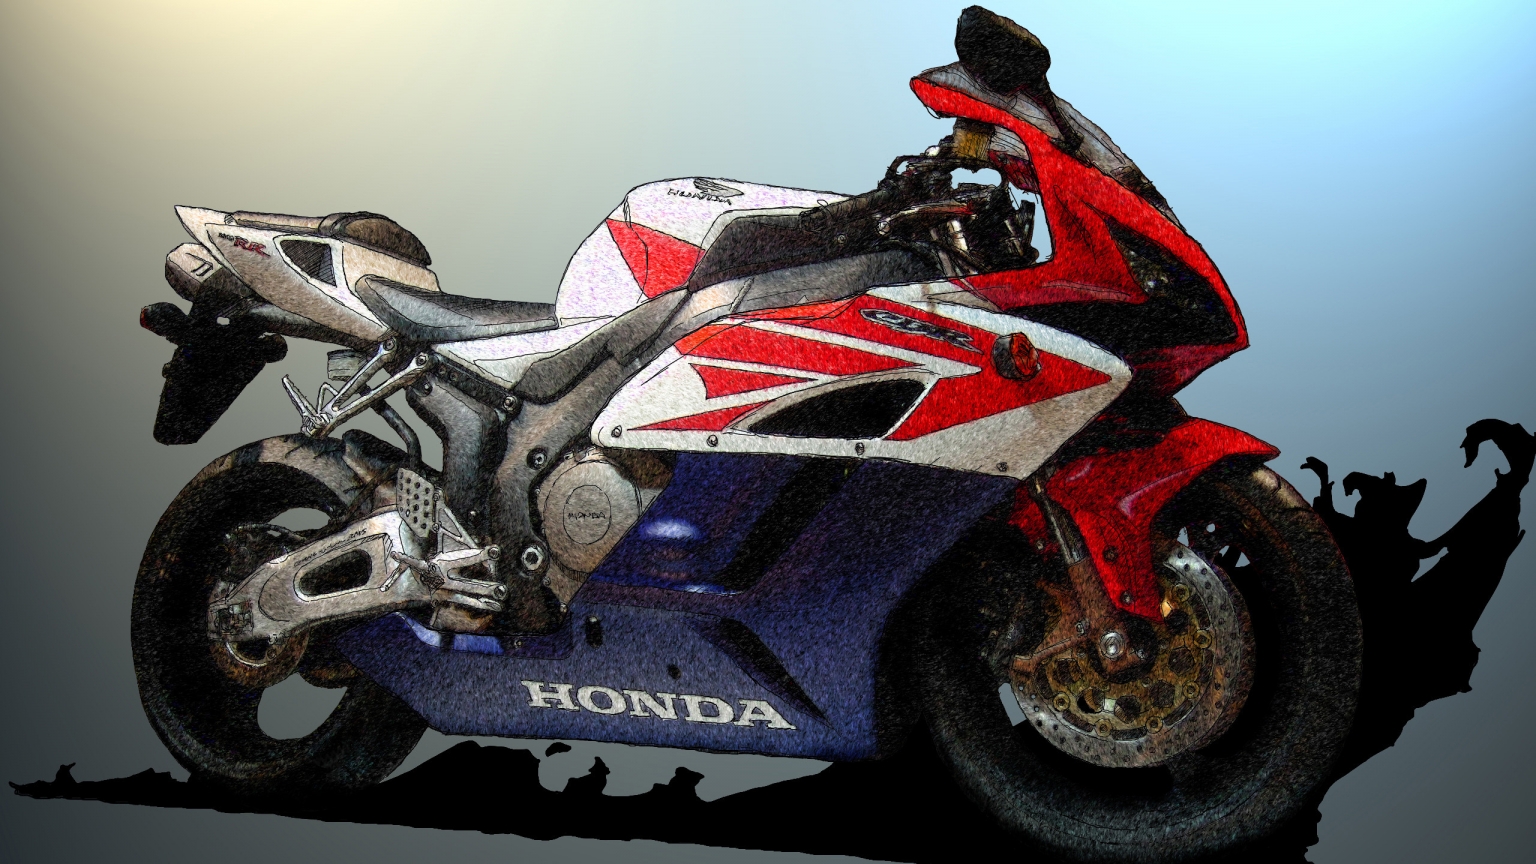 Honda CBR Sketch for 1536 x 864 HDTV resolution